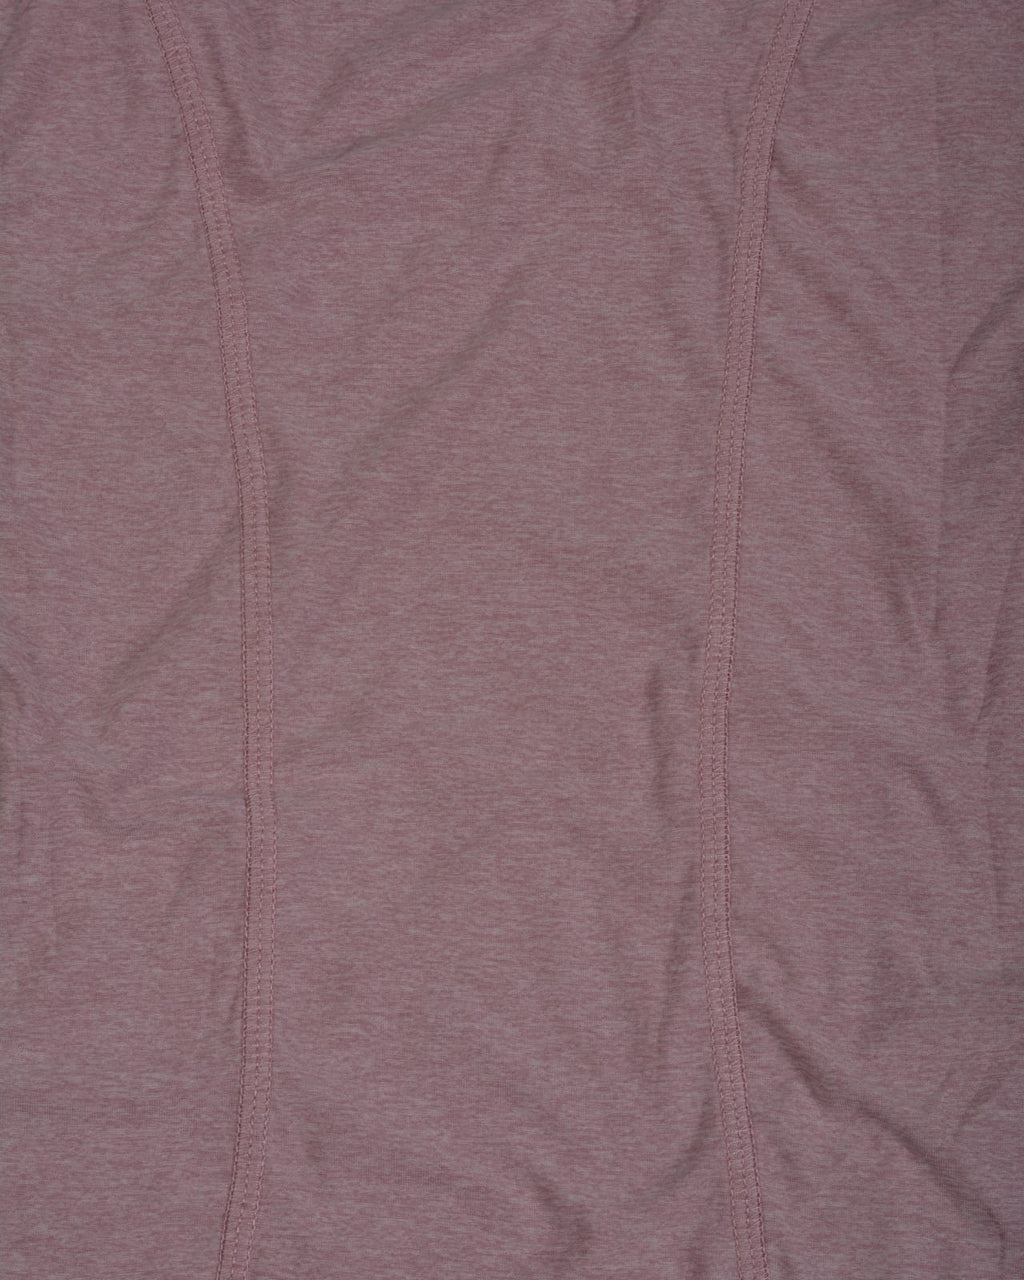 Marika Women's Marcy Short Sleeve T-Shirt Pink